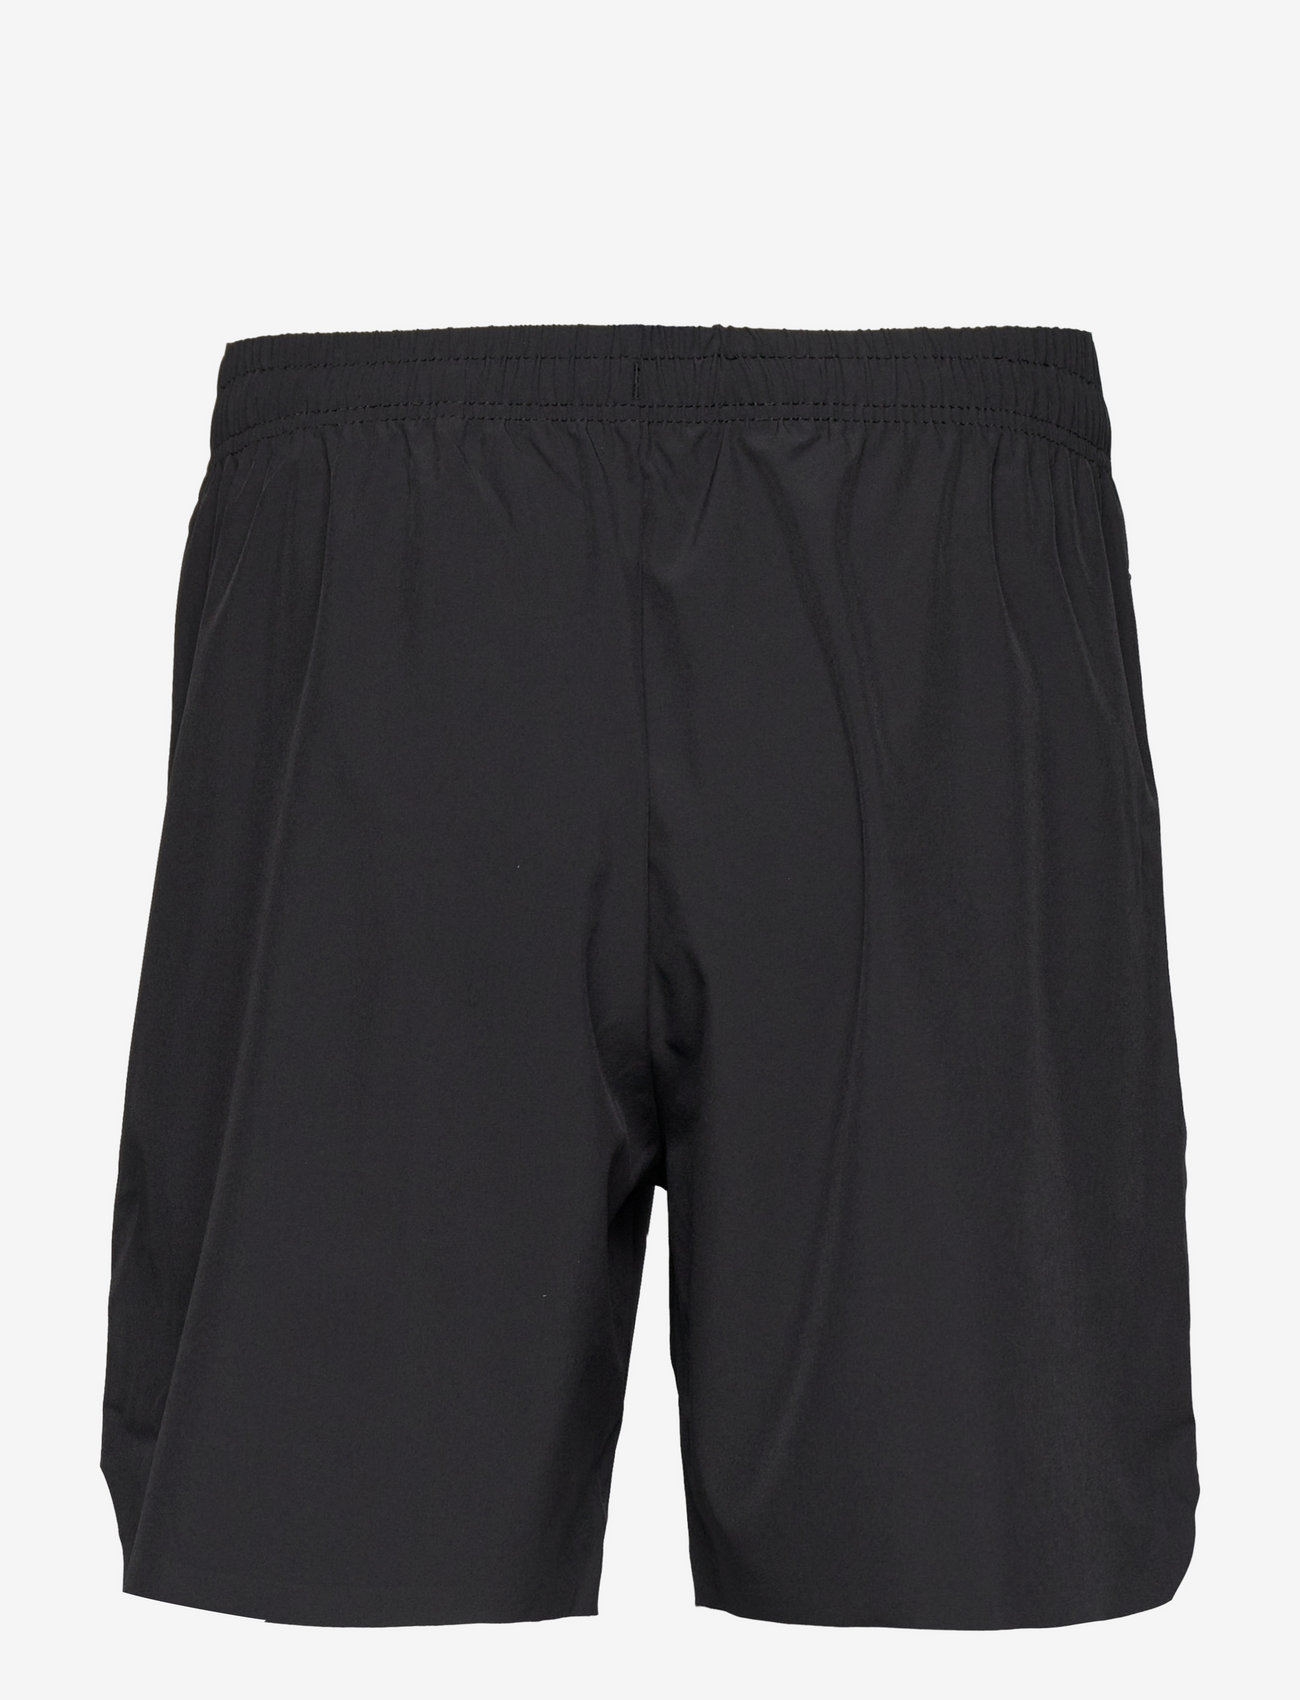 Virtus - Spier M Shorts - trainingshorts - black - 1